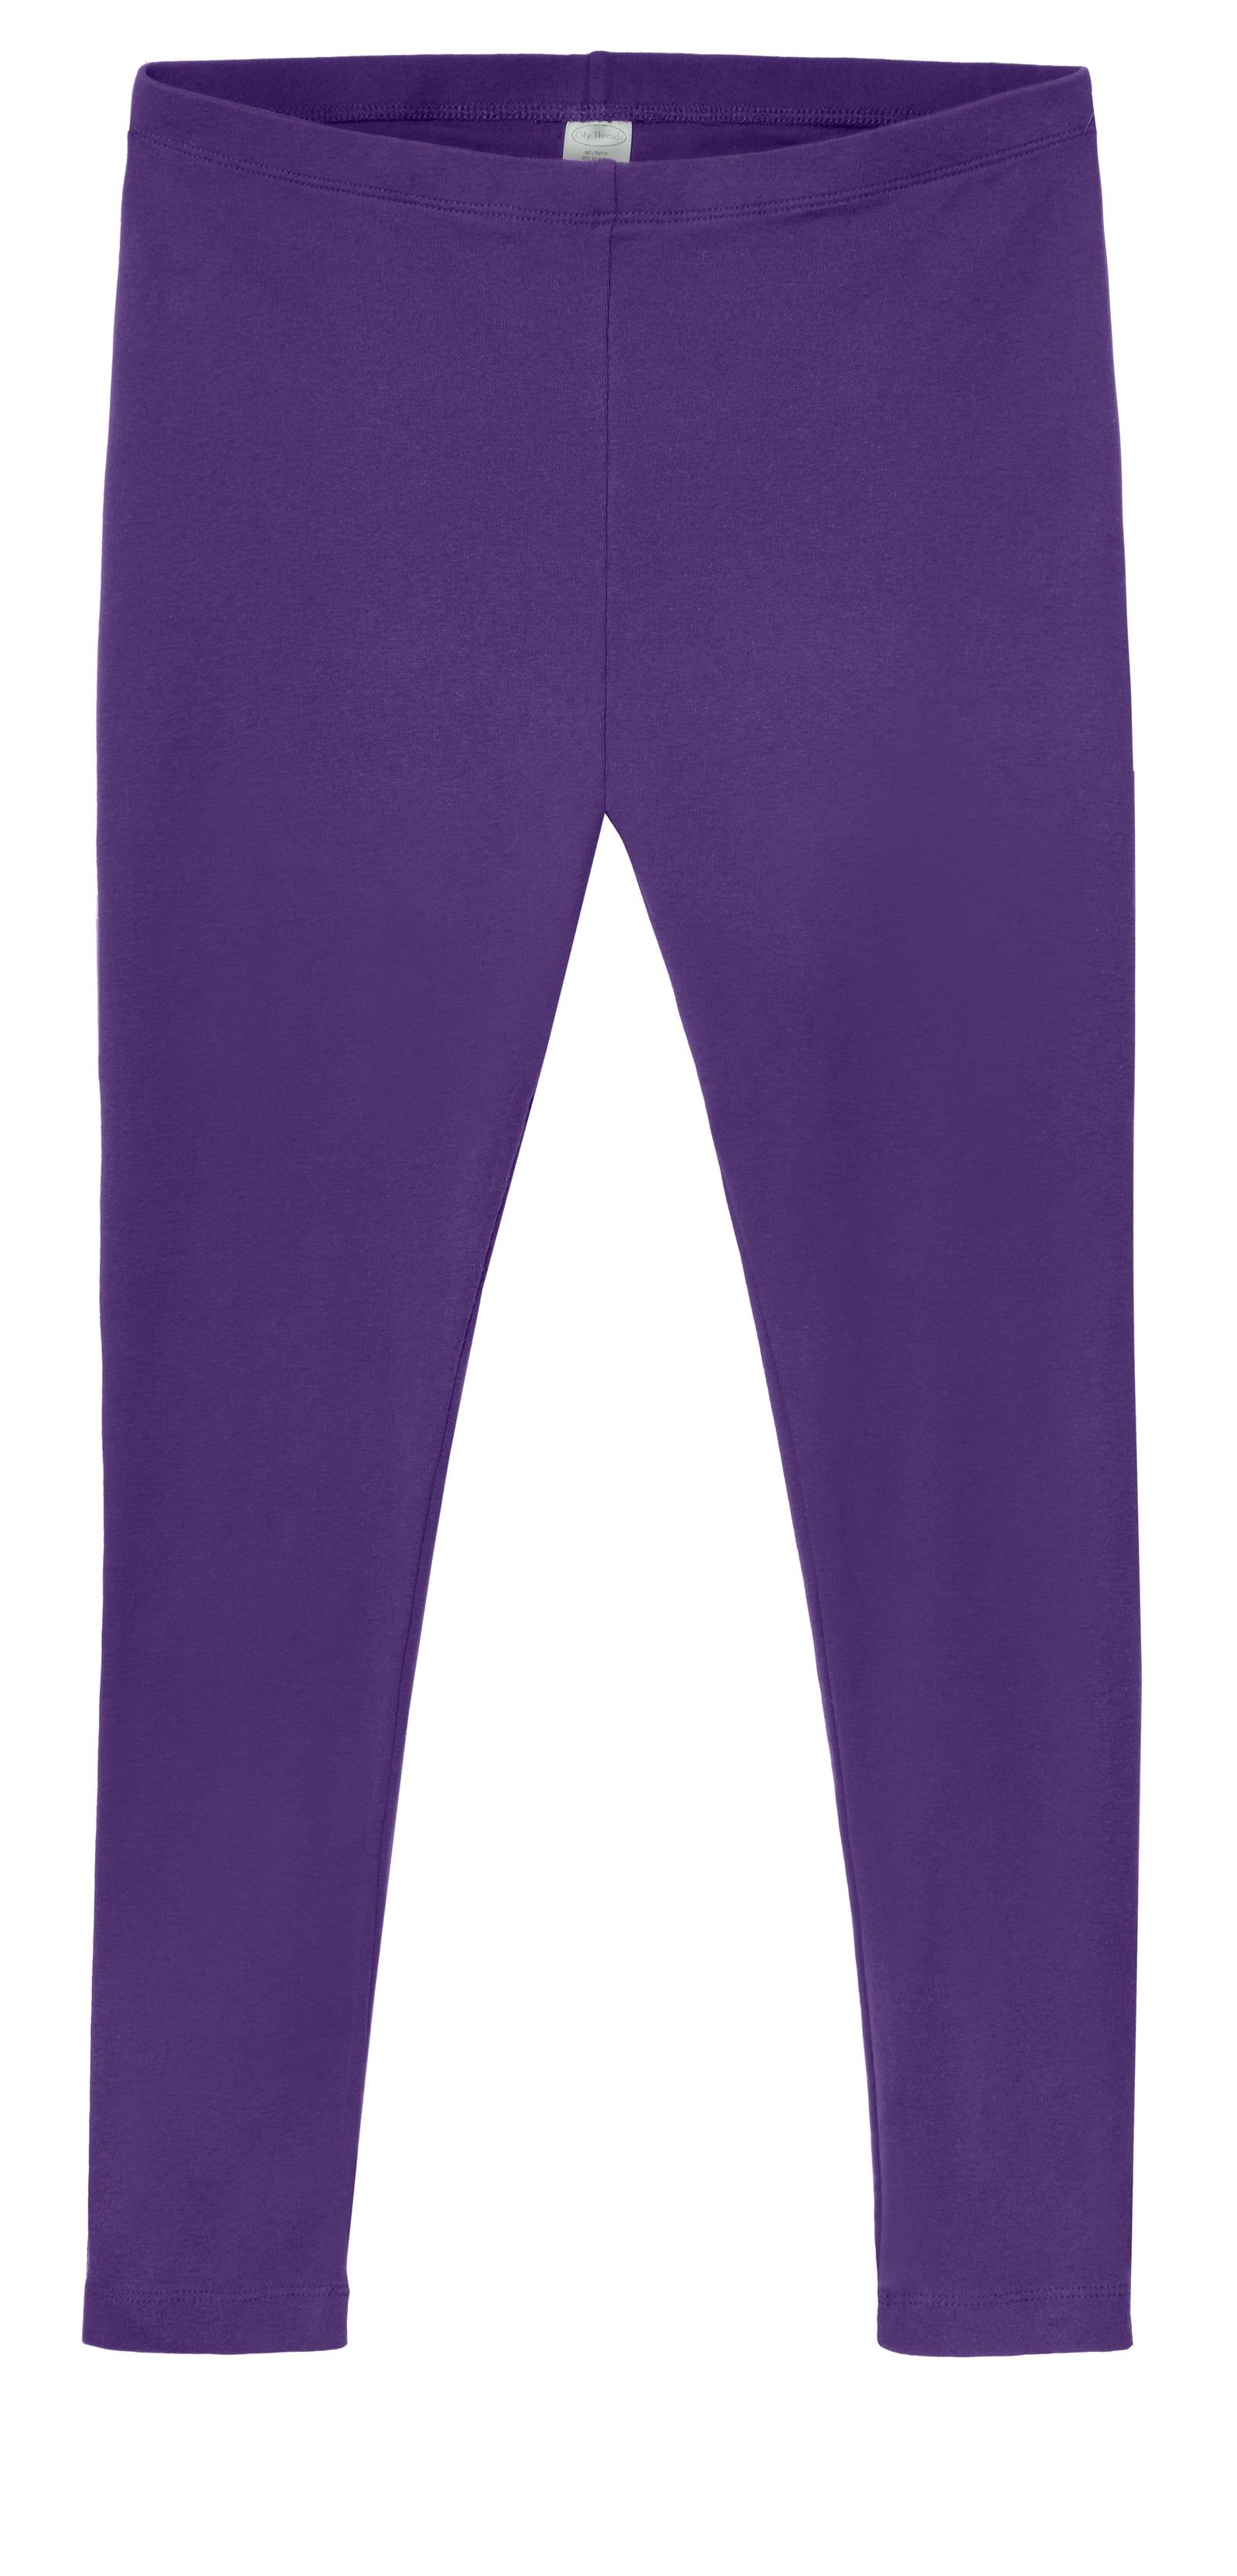 Purple Legging Stretchable Leggings Cotton Blend Pants Slex Yoga Full  Length Her